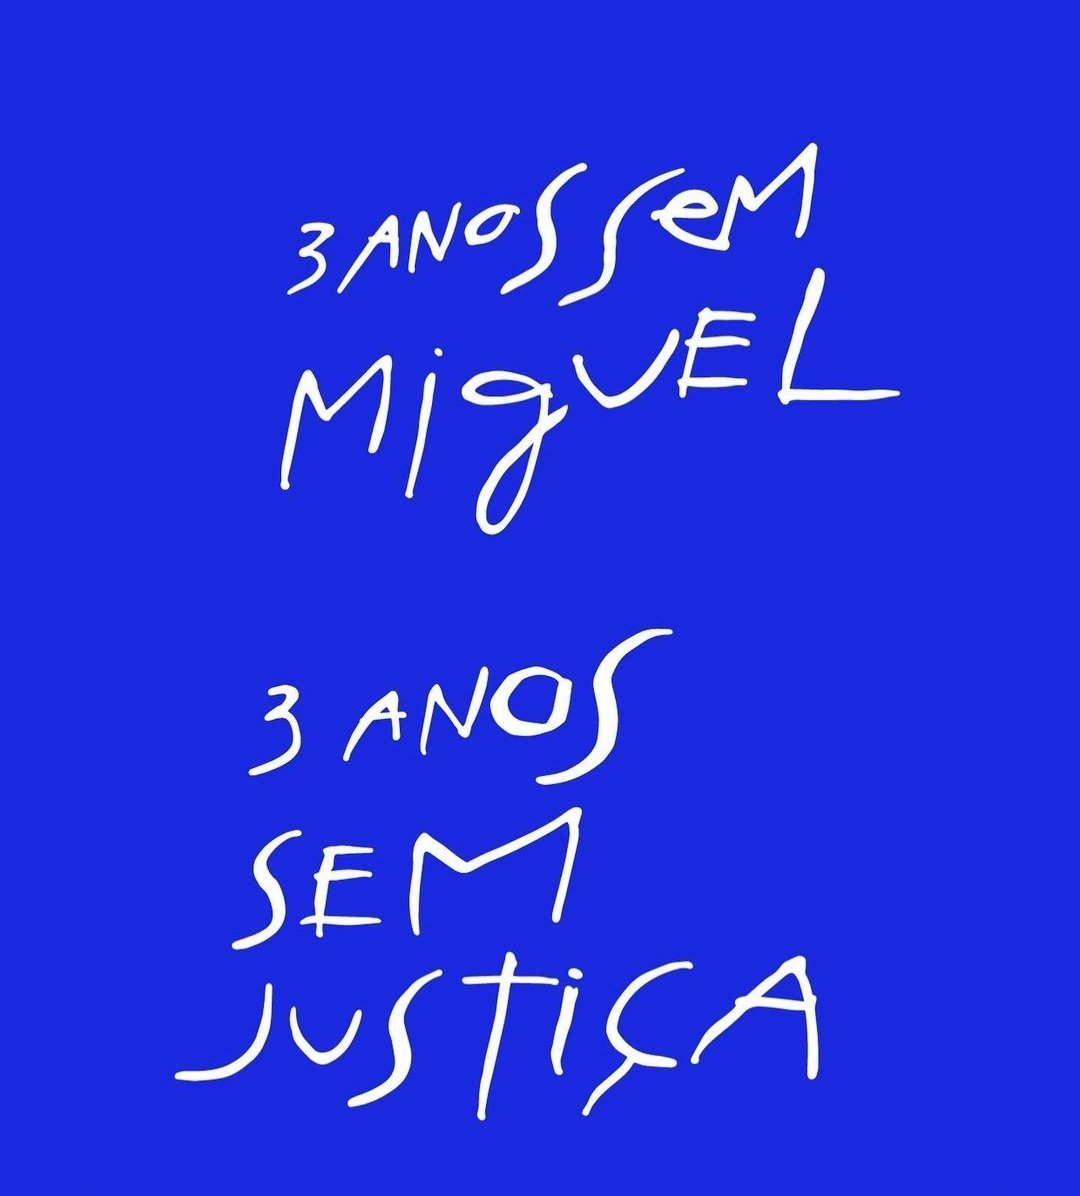 #justiçapormiguel
#JustiçaPorMiguel 
#JusticeForMiguel 
@mirtes_renata 
@AfroID_UK